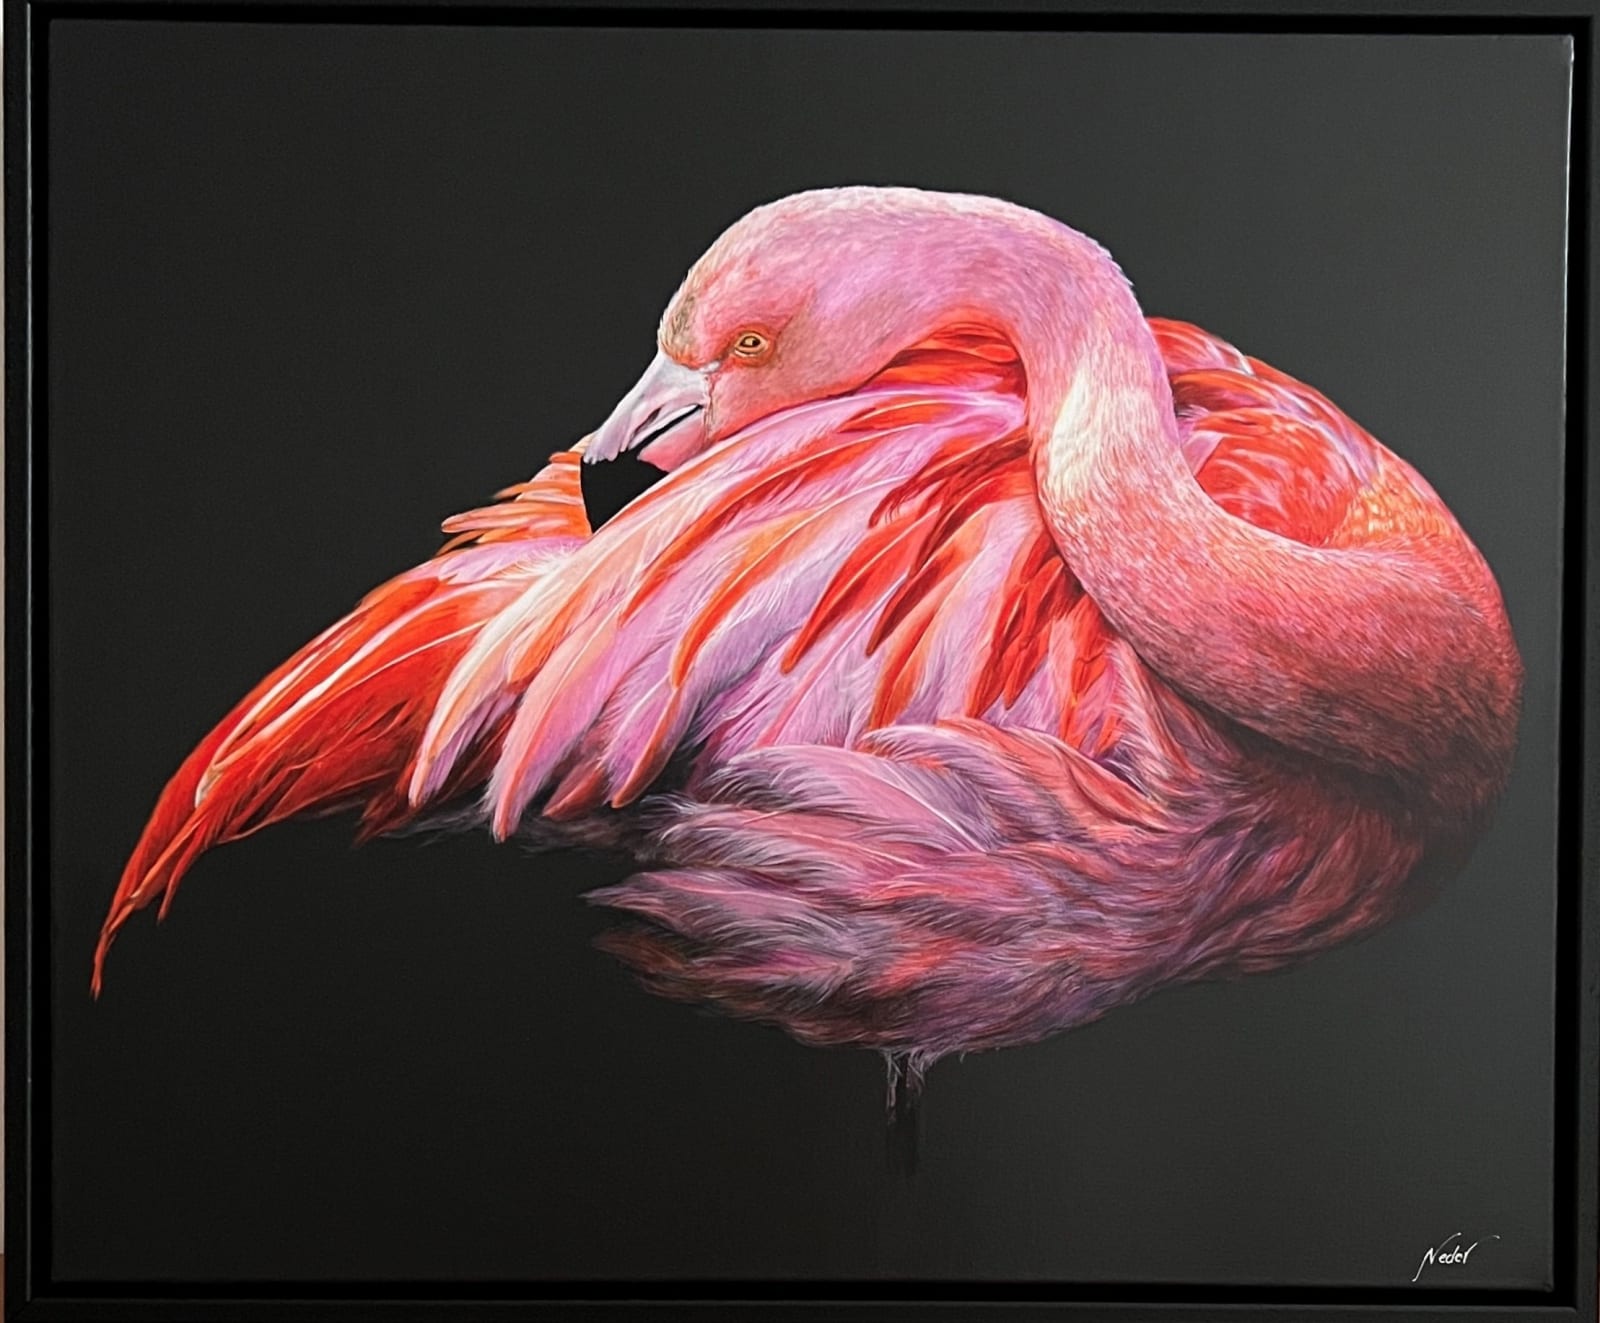 Judit Neder, Magic of Caribbean ( Flamingo), 2022